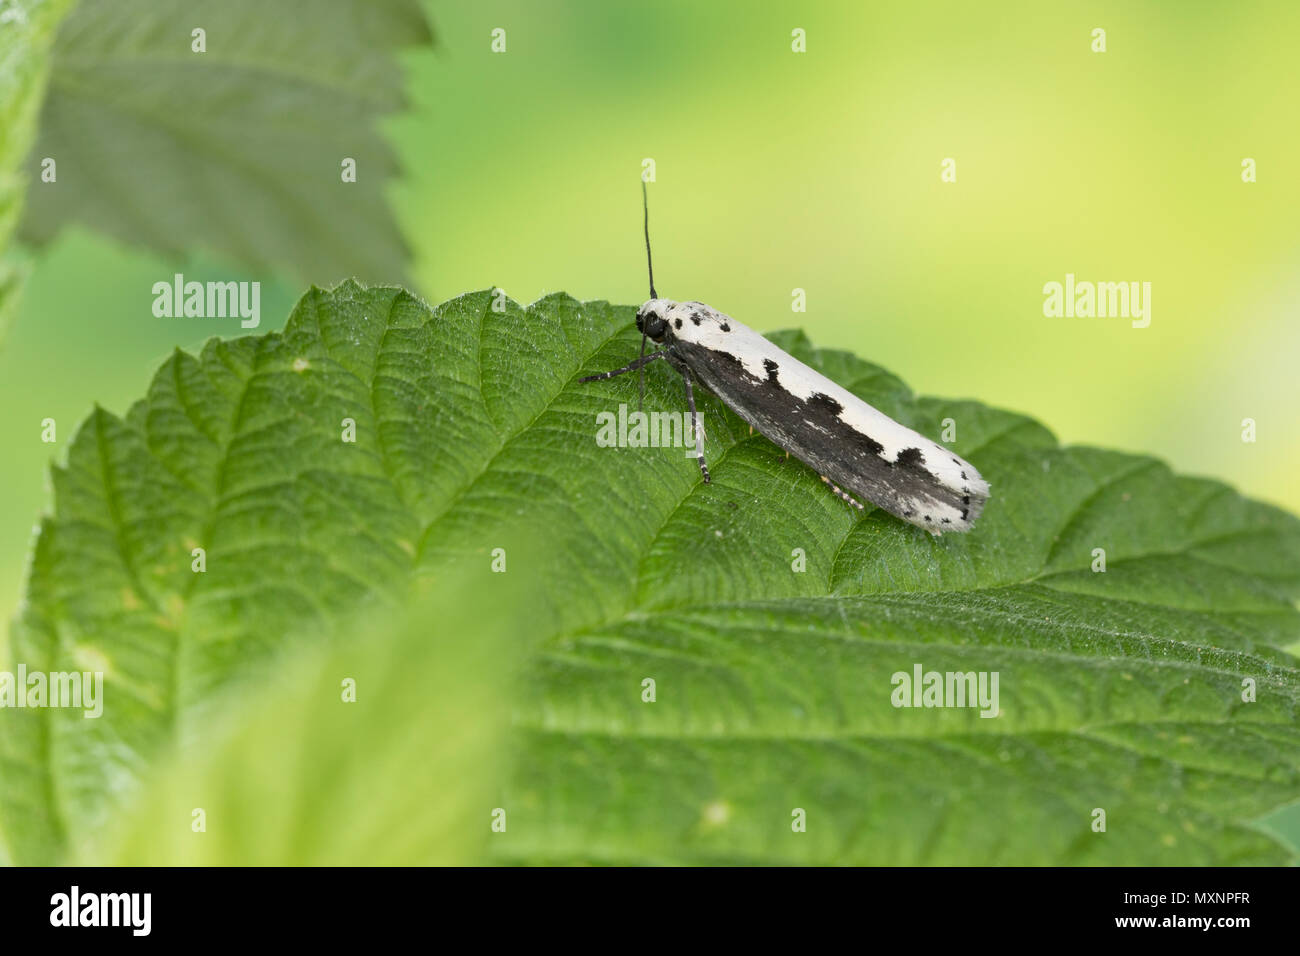 Natternkopf-Grasminiermotte, Nachtfalter - Grasminiermotte, Grasminiermotte, Ethmia bipunctella, Viper's Bugloss Moth, Vipers Bugloss Moth, Bordered E Stock Photo